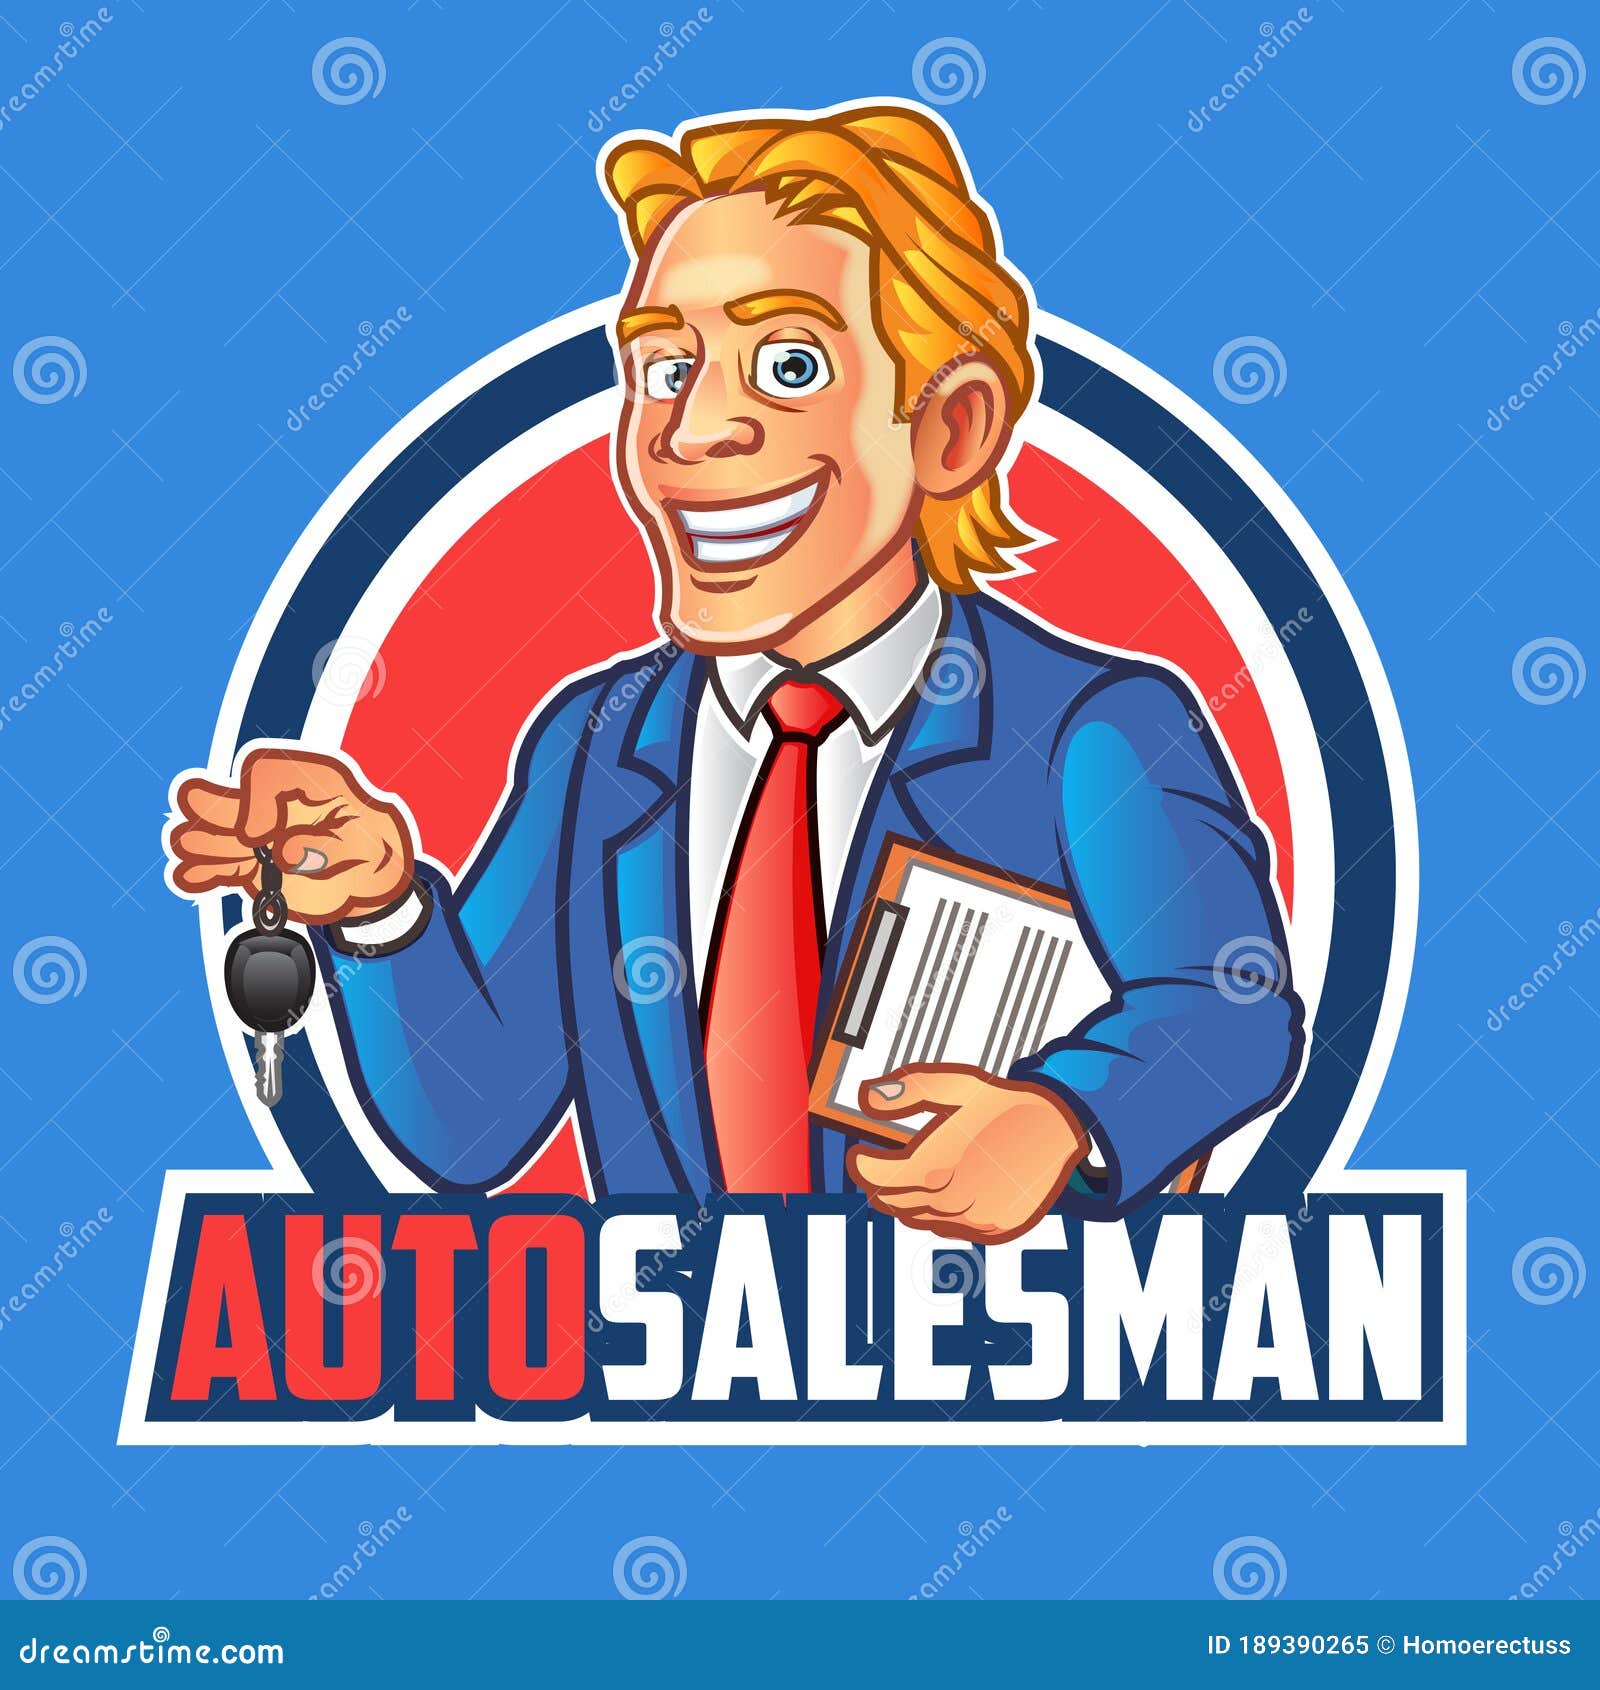 Auto Salesman Cartoon Mascot Logo Stock Vector - Illustration of marketing,  carrying: 189390265